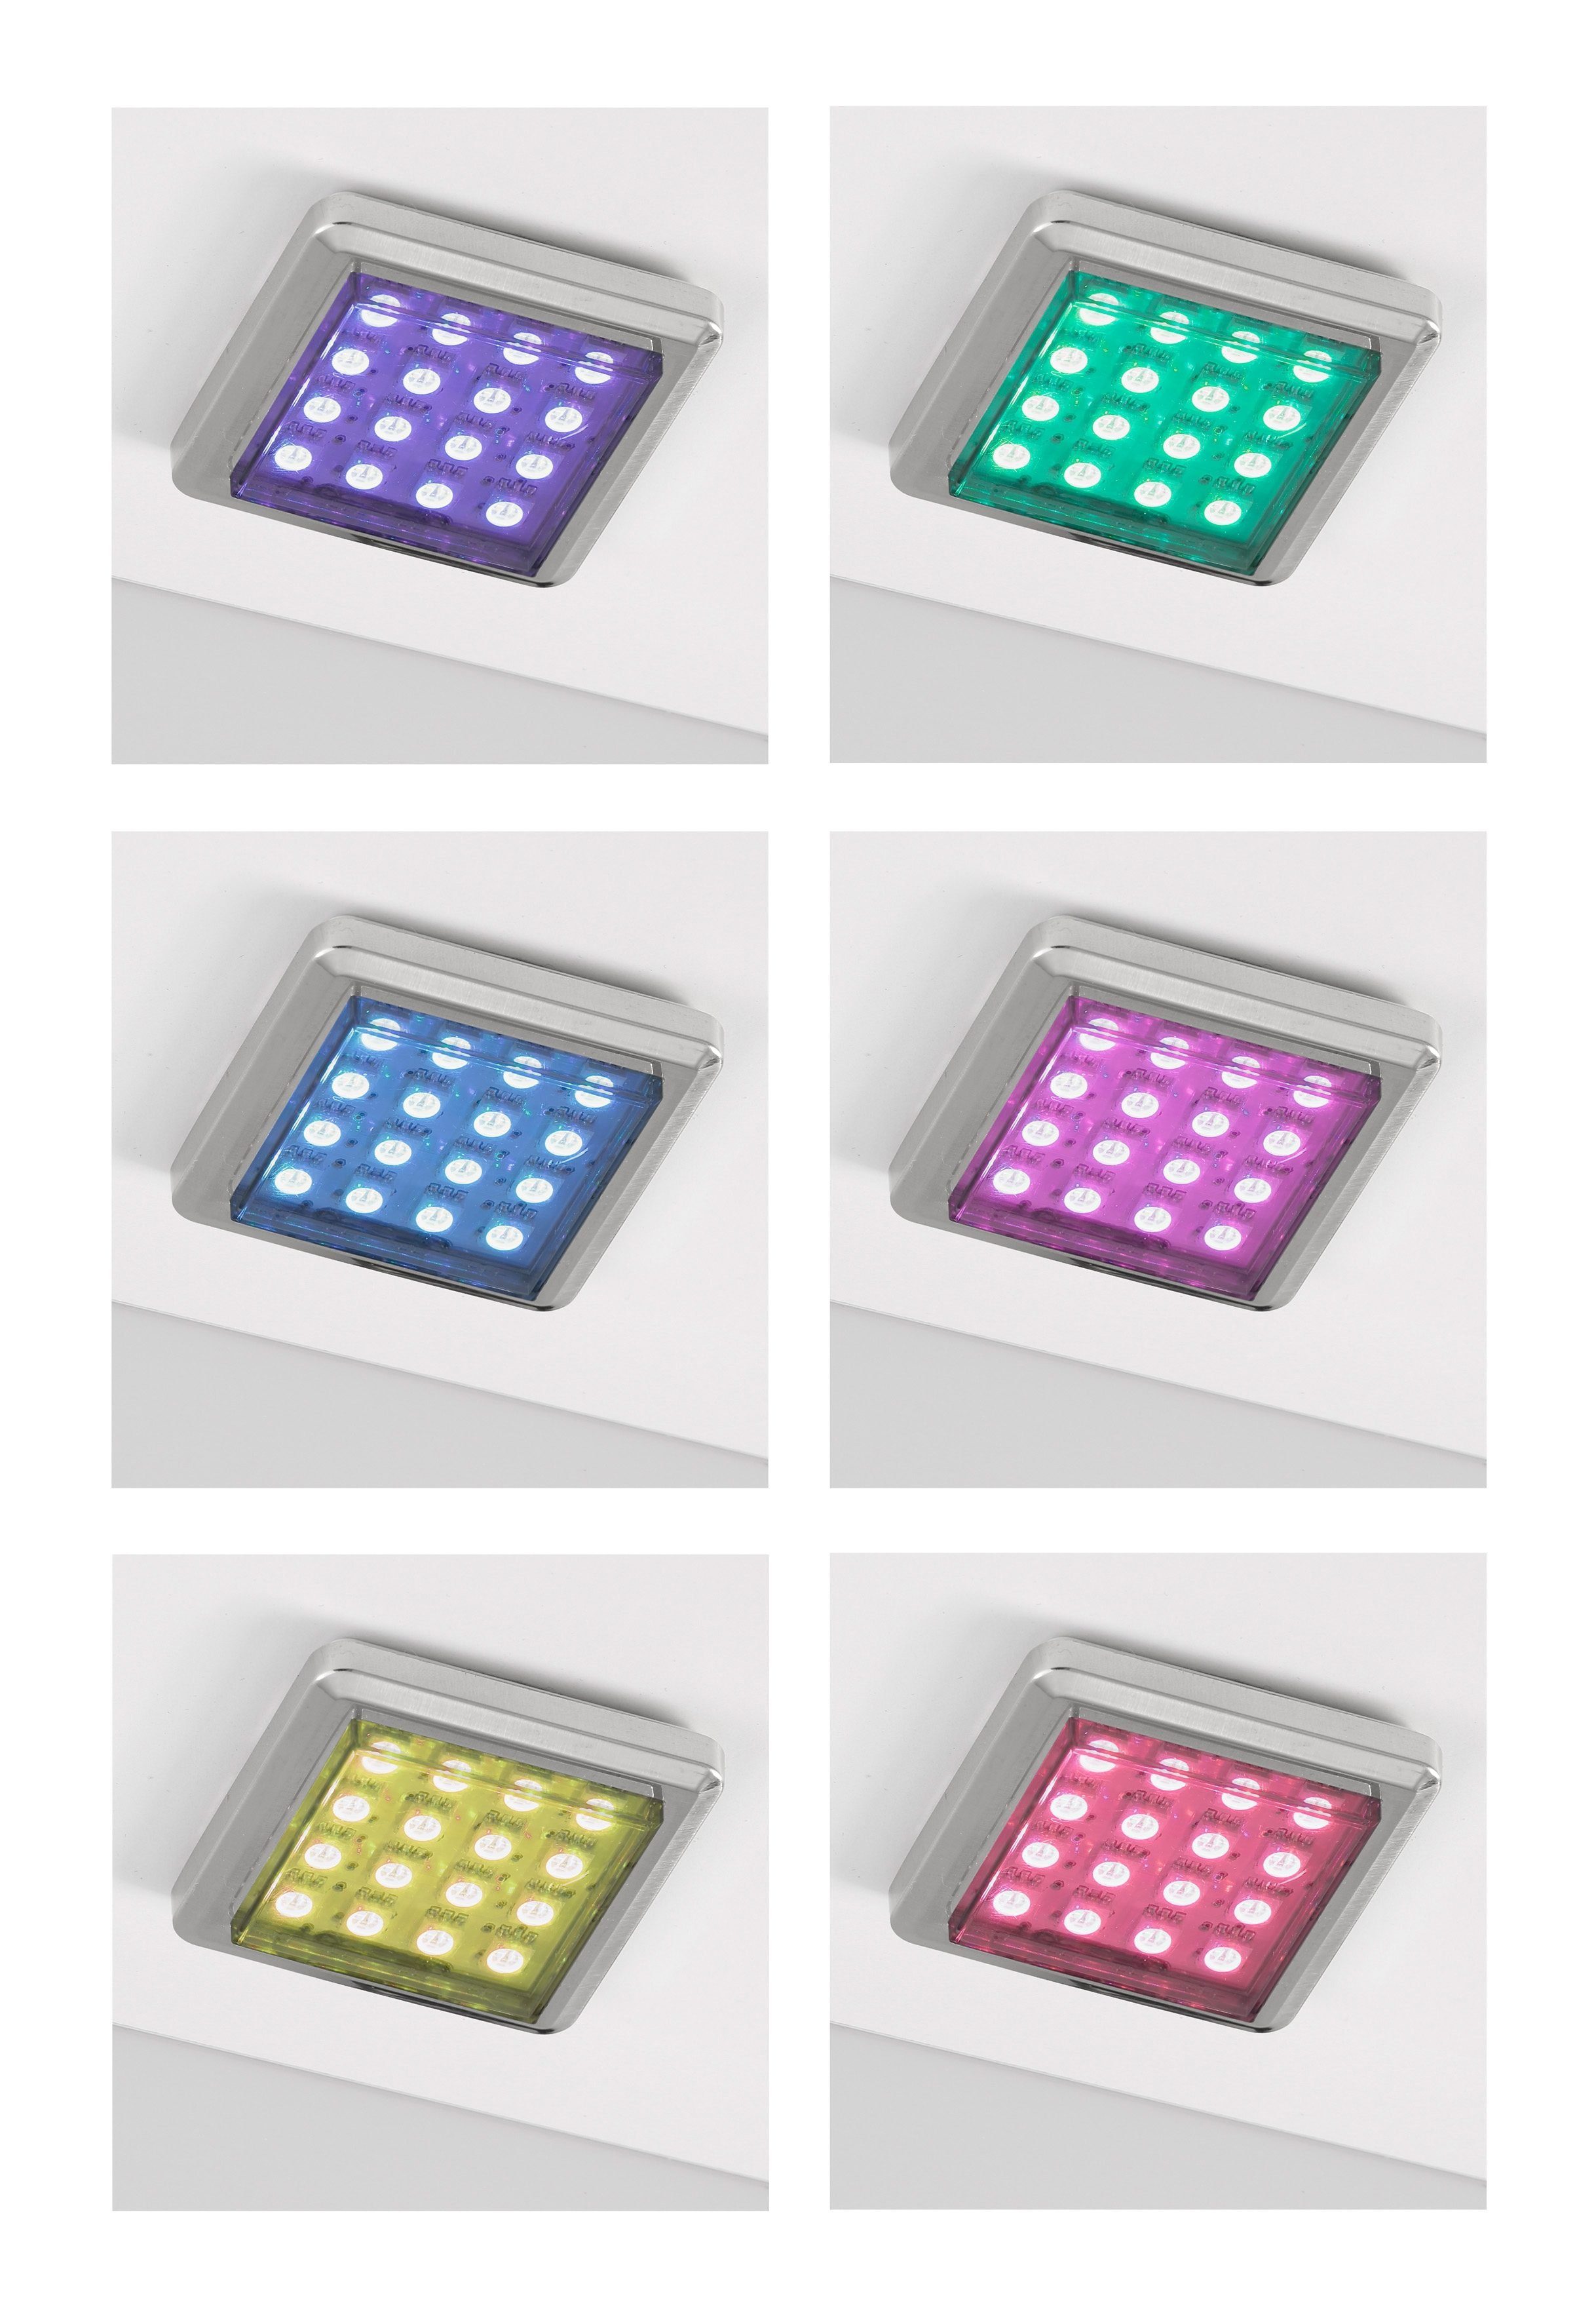 fest LED für integriert, Blickfang moderne LED Einrichtungen Unterbauleuchte,